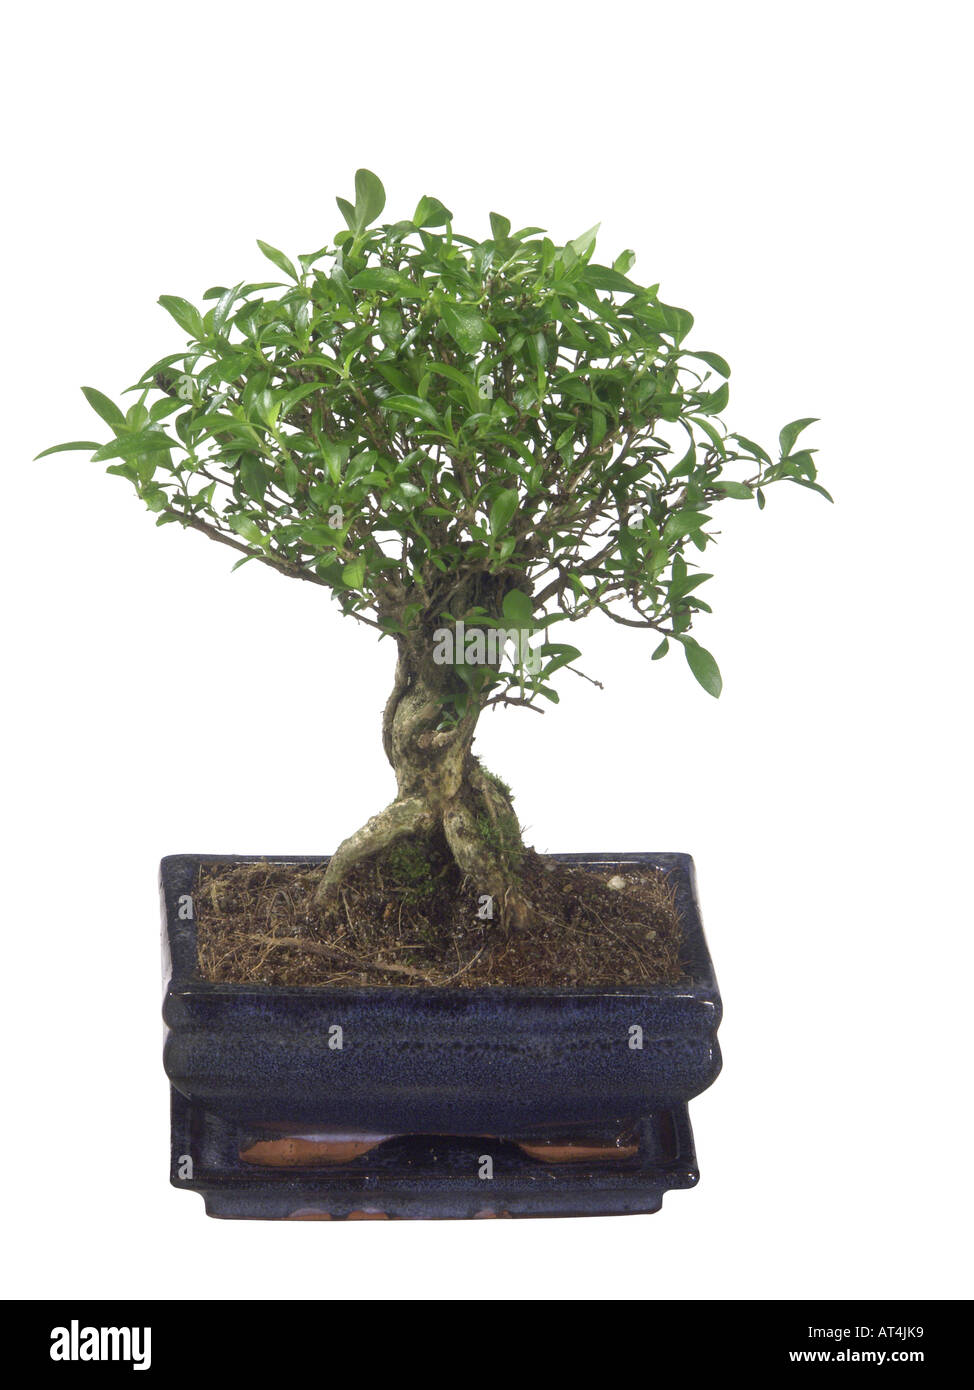 serissa, yellow rim (Serissa foetida, Serissa japonica), bonsai Stock Photo